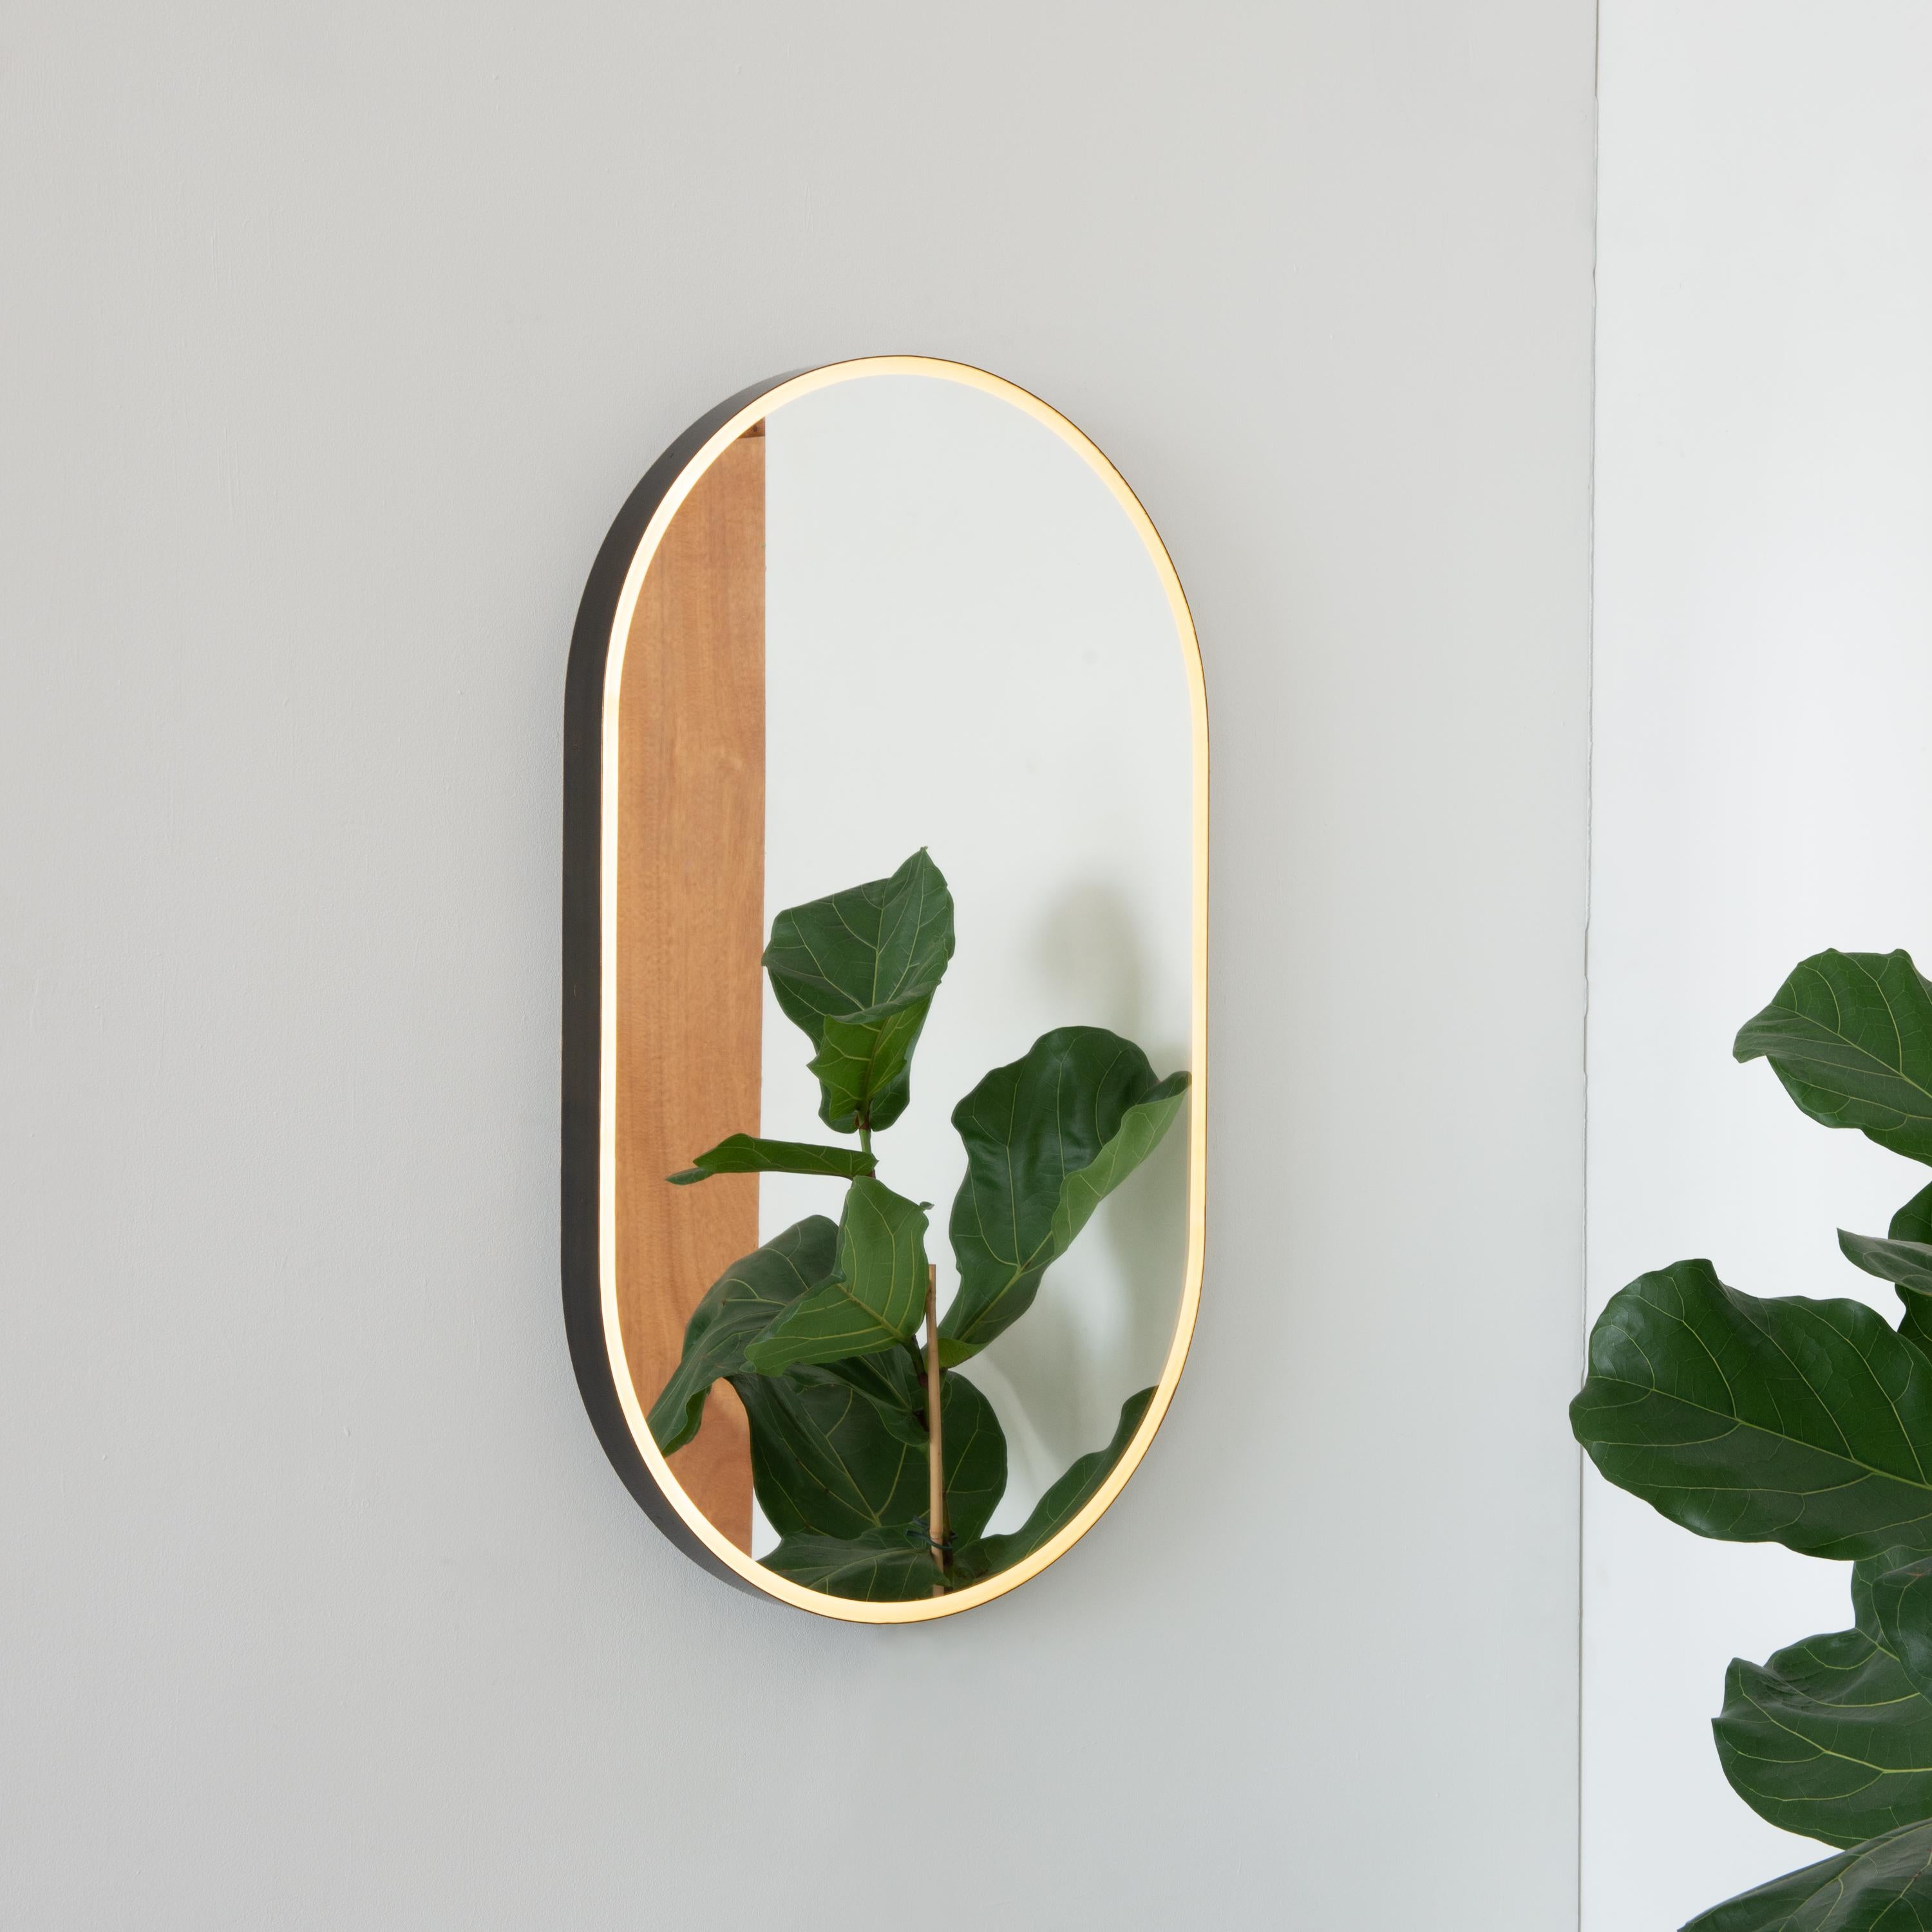 Capsula Illuminated Pill Shaped Customisable Mirror, Bronze Patina Frame, Large For Sale 1